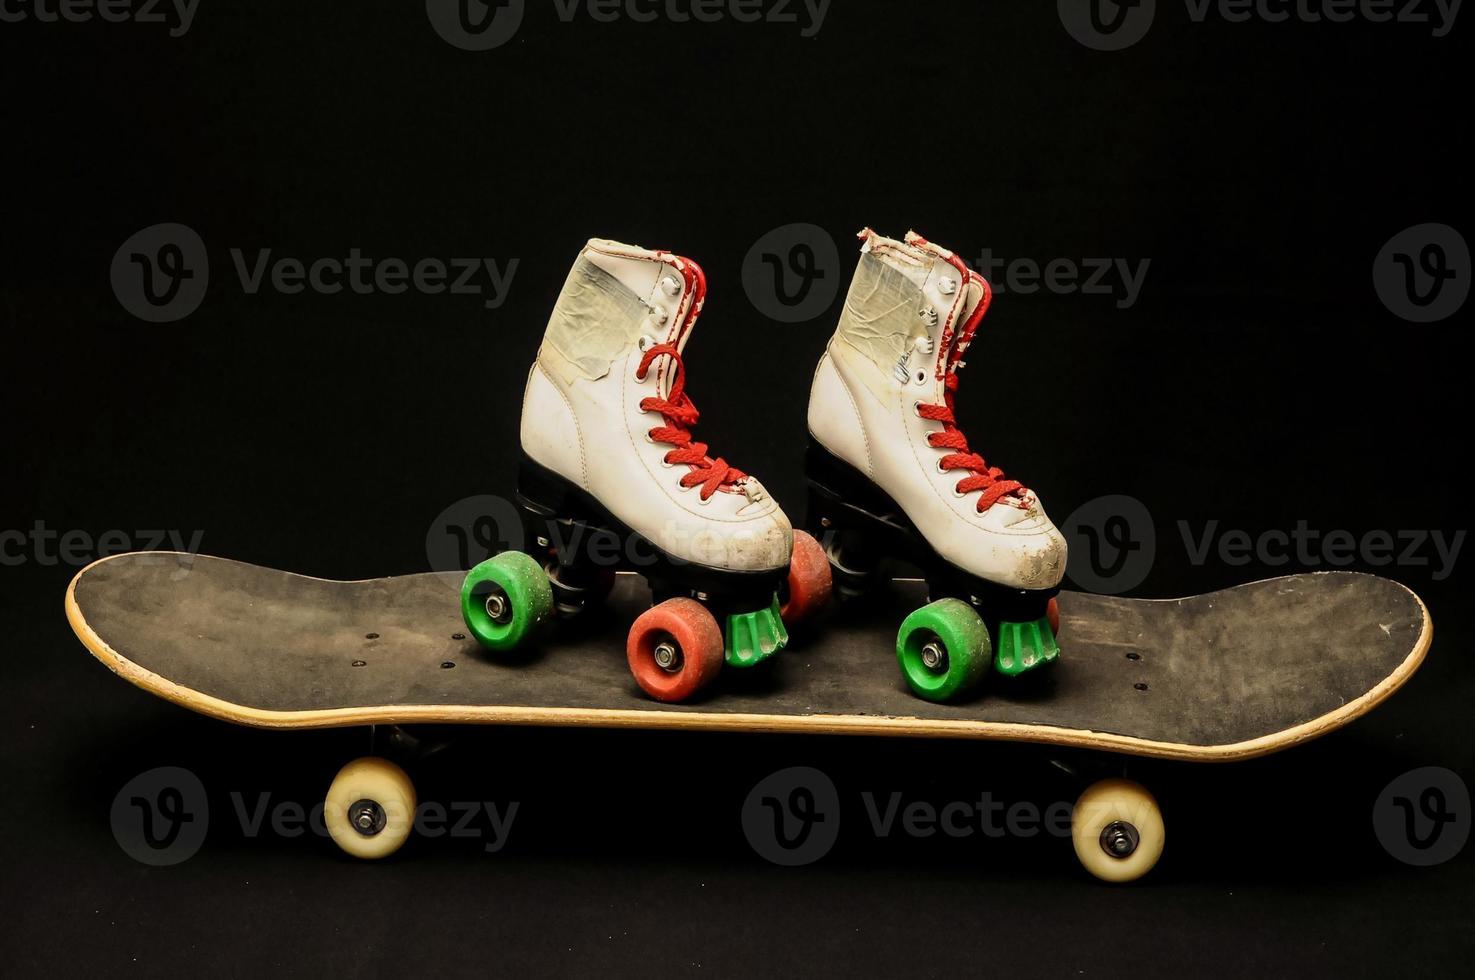 Board and skates photo